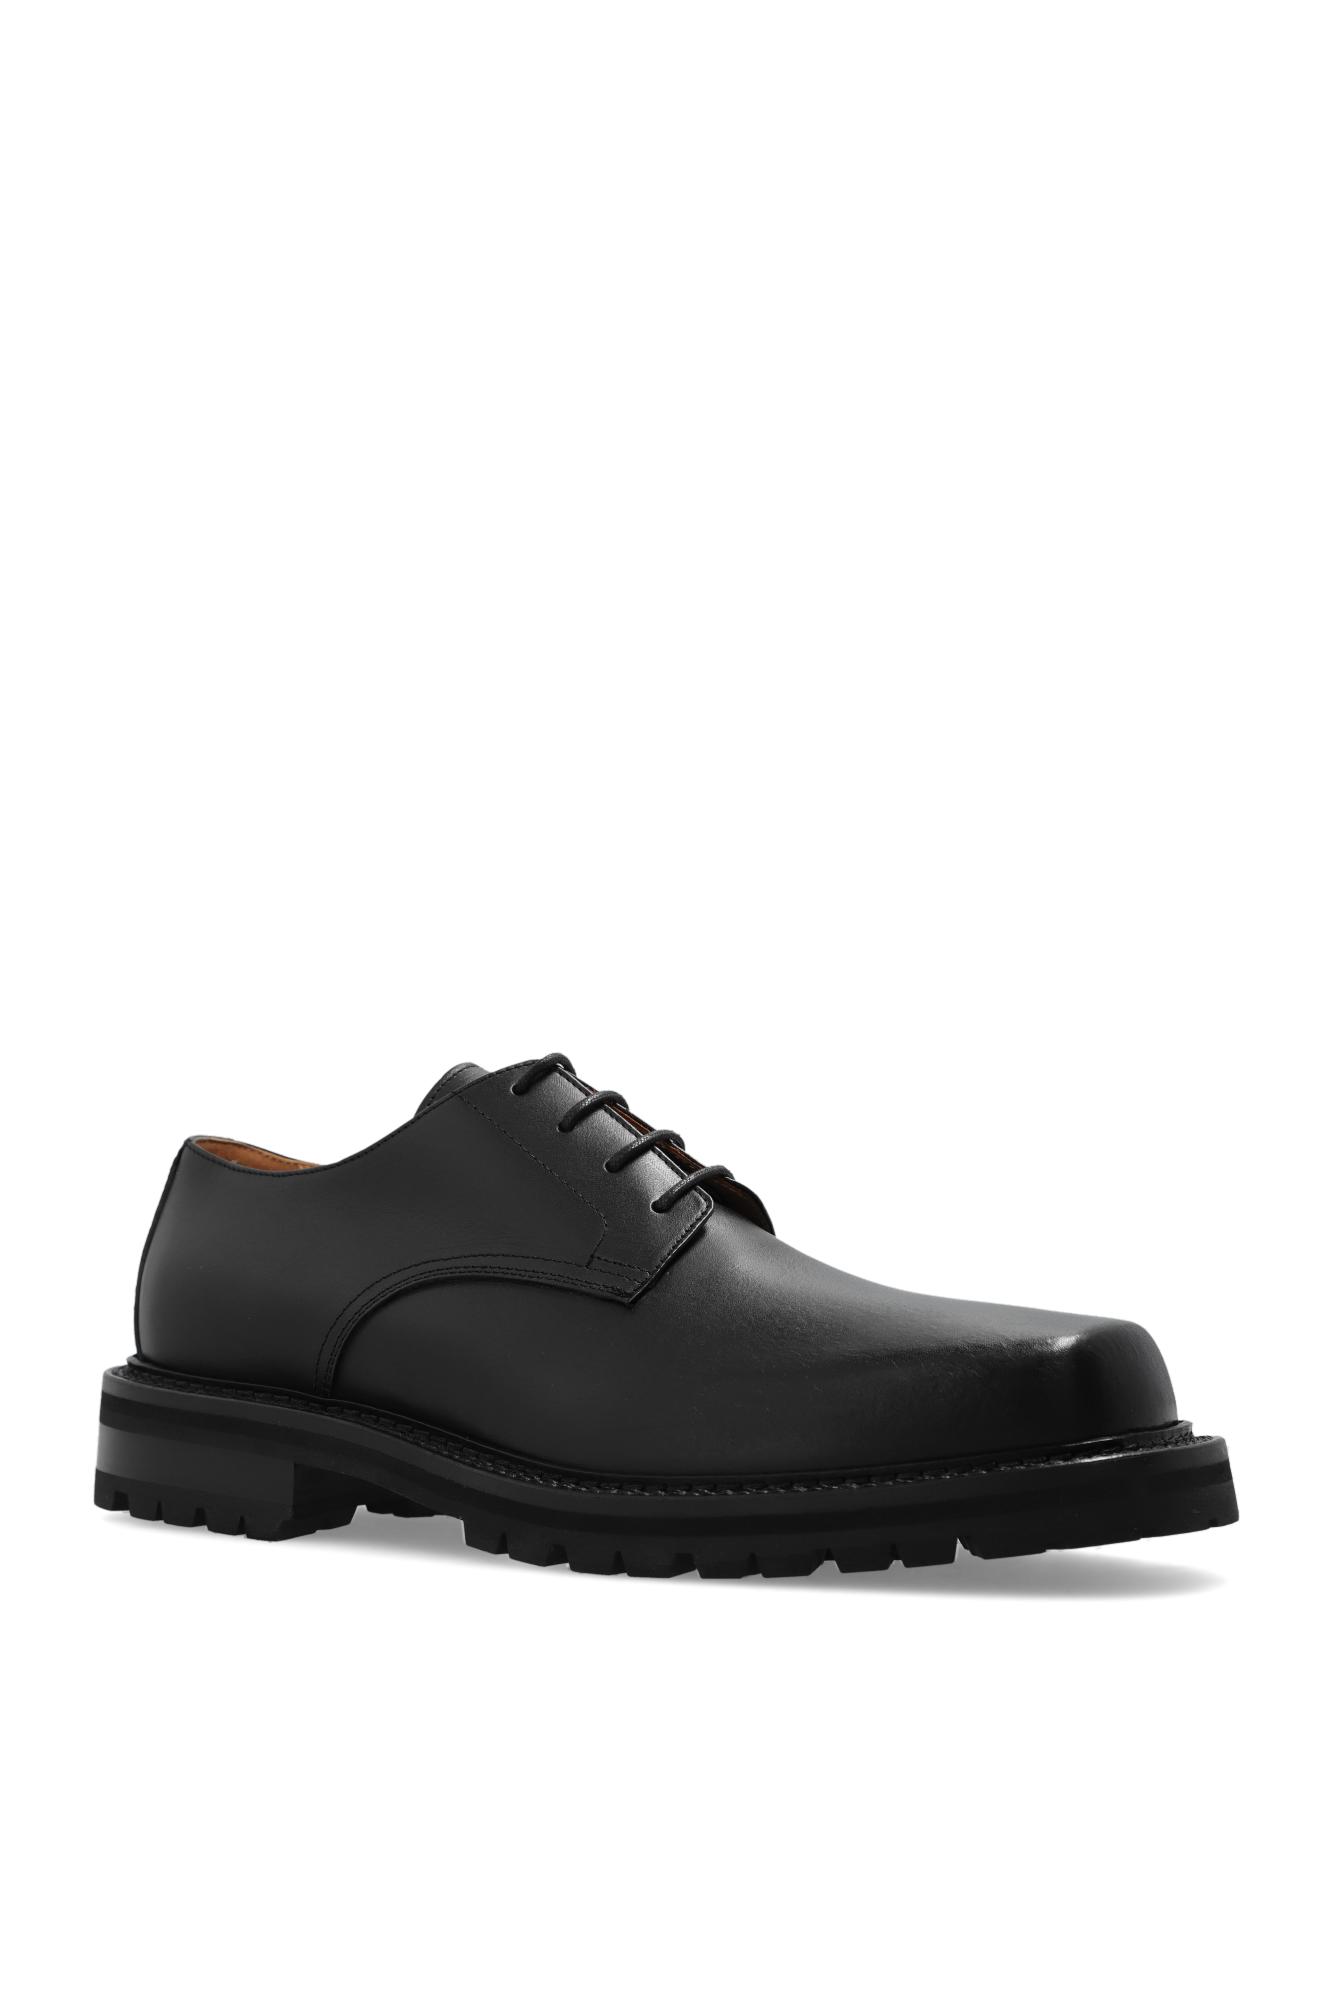 Dries Van Noten Leather Derby Shoes in Black | Lyst